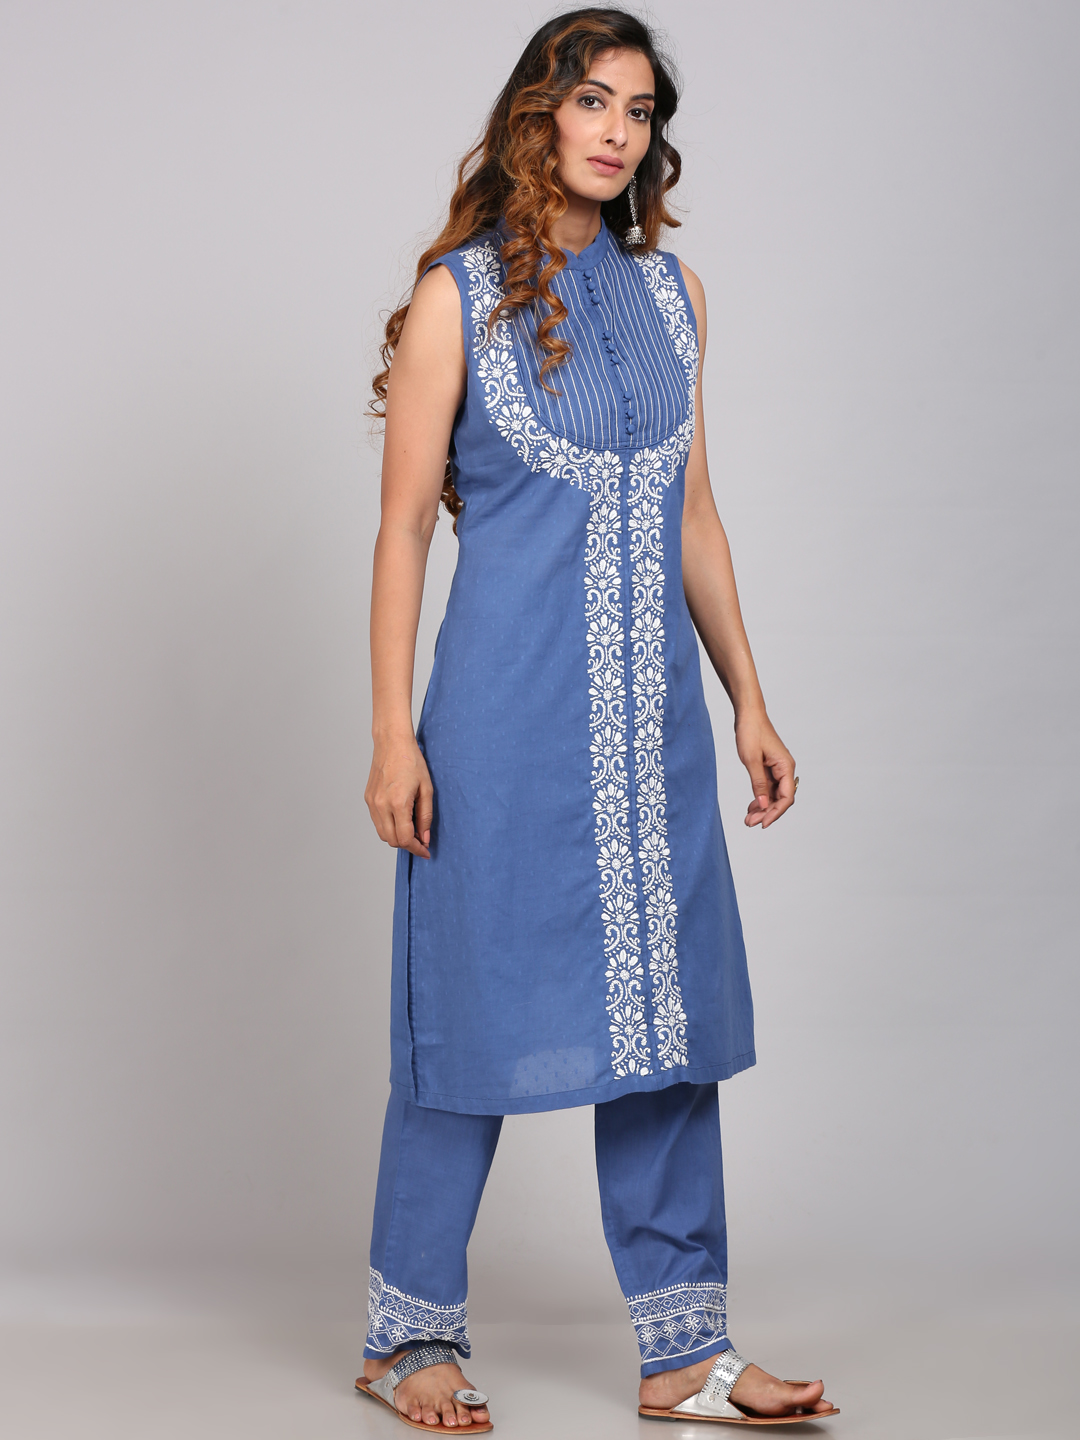 Maroon Ajrakh Sleeveless Kurta With Ikat Neckline | Cotton kurti designs,  Kurti designs, Ladies tops fashion